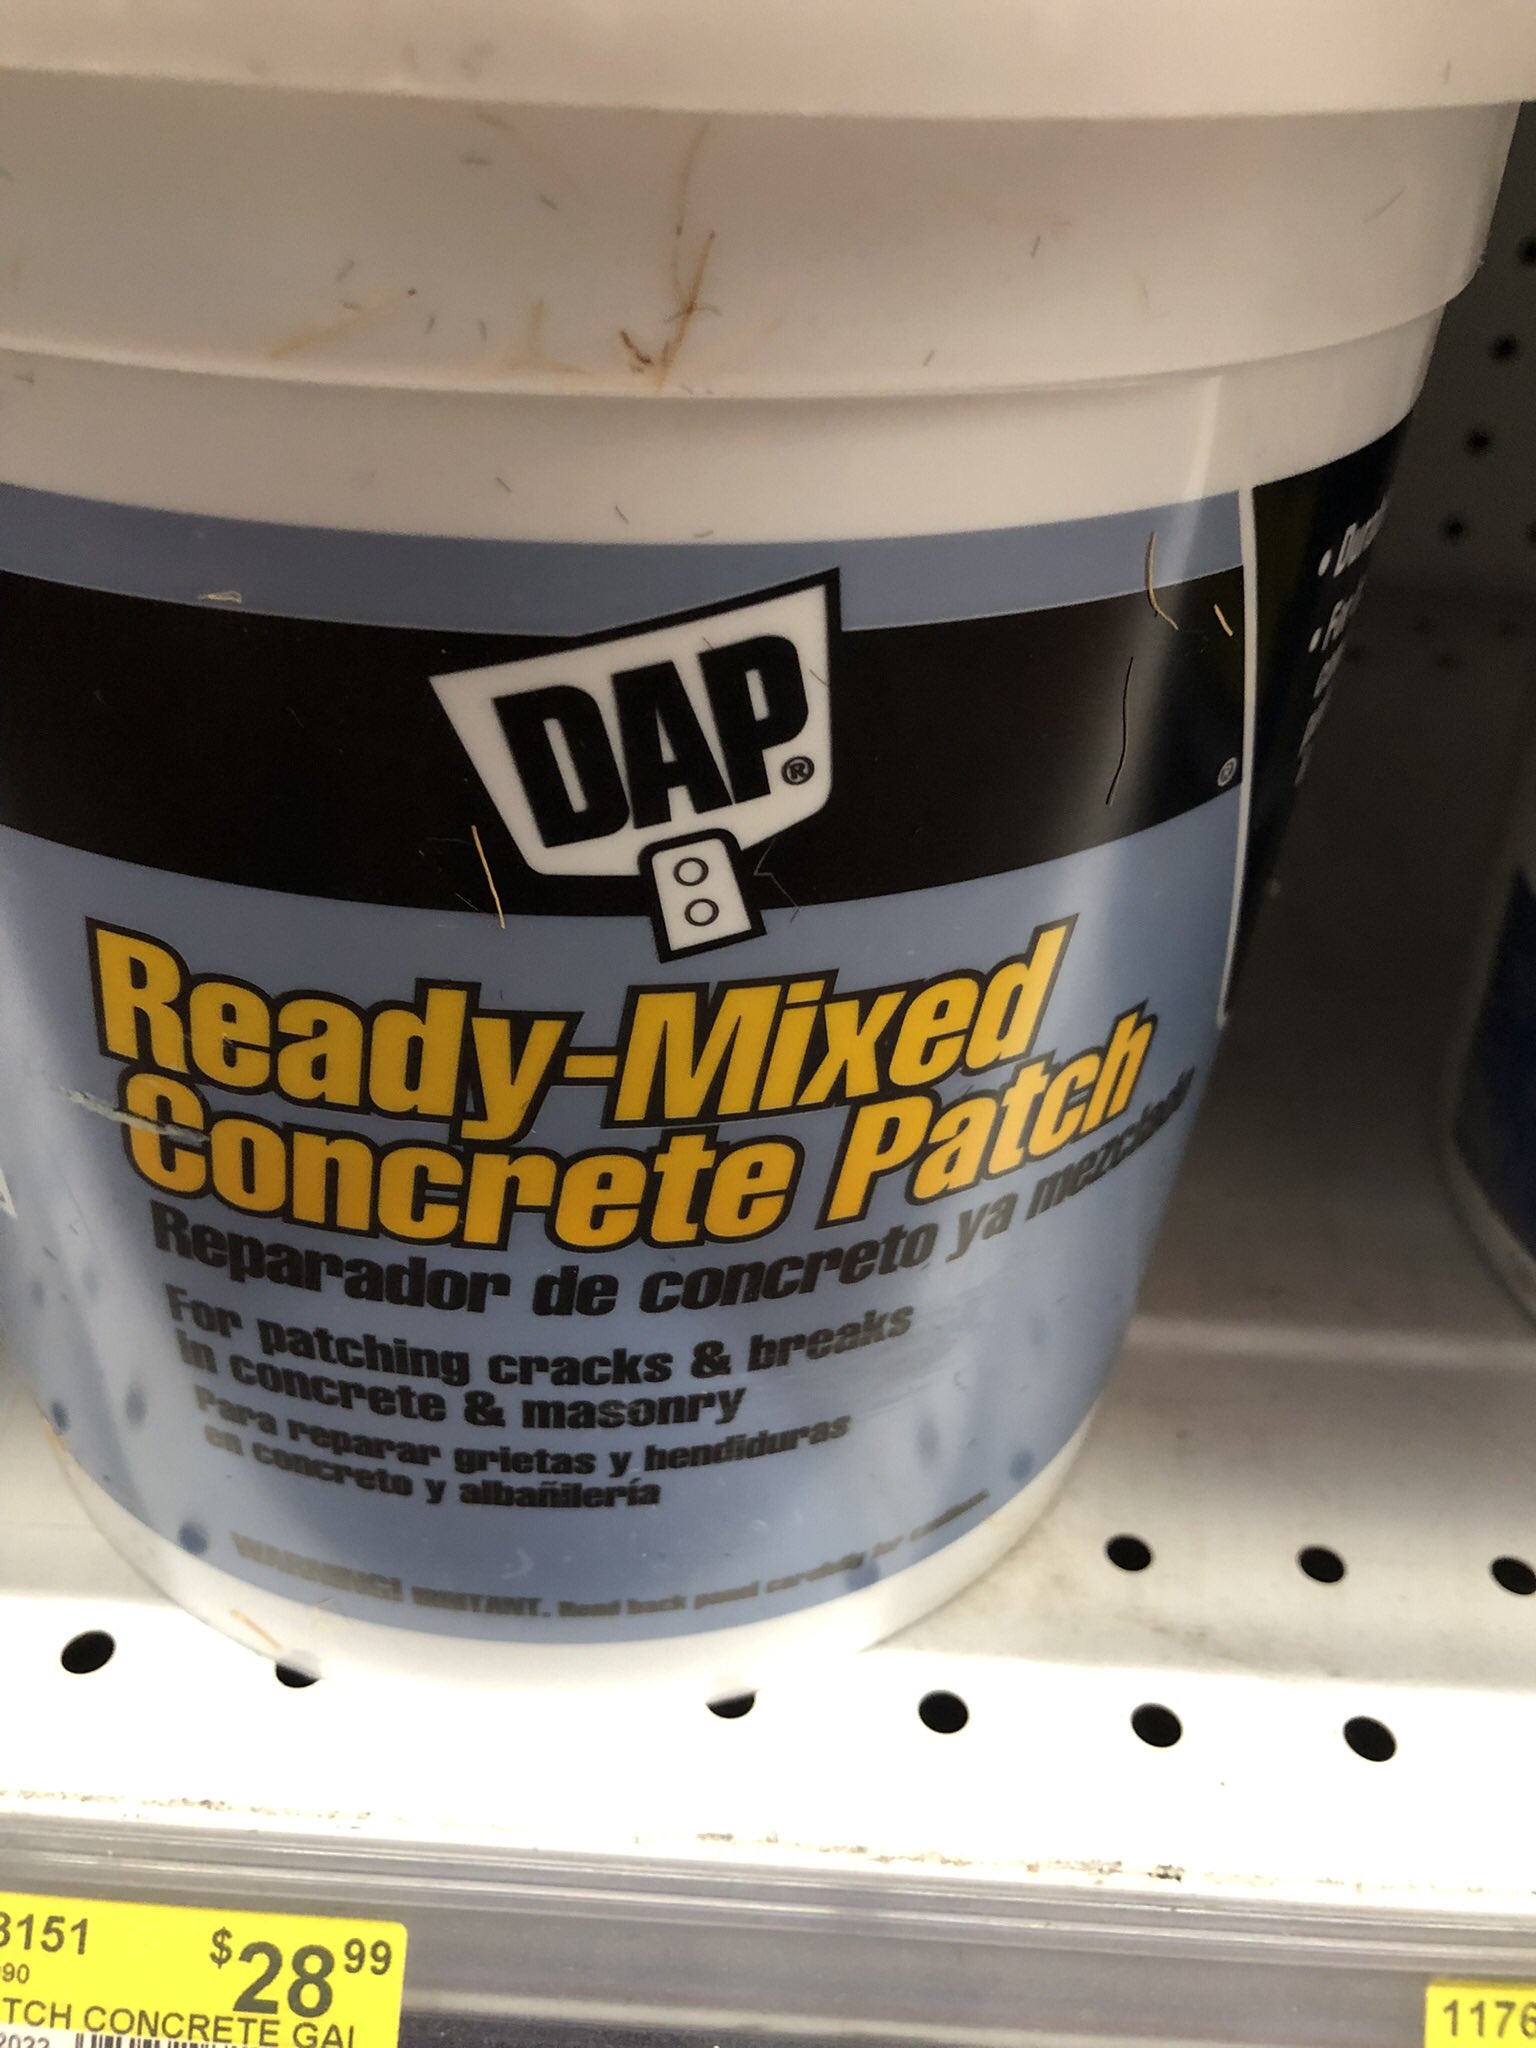 Ready-Mixed Concrete Patch